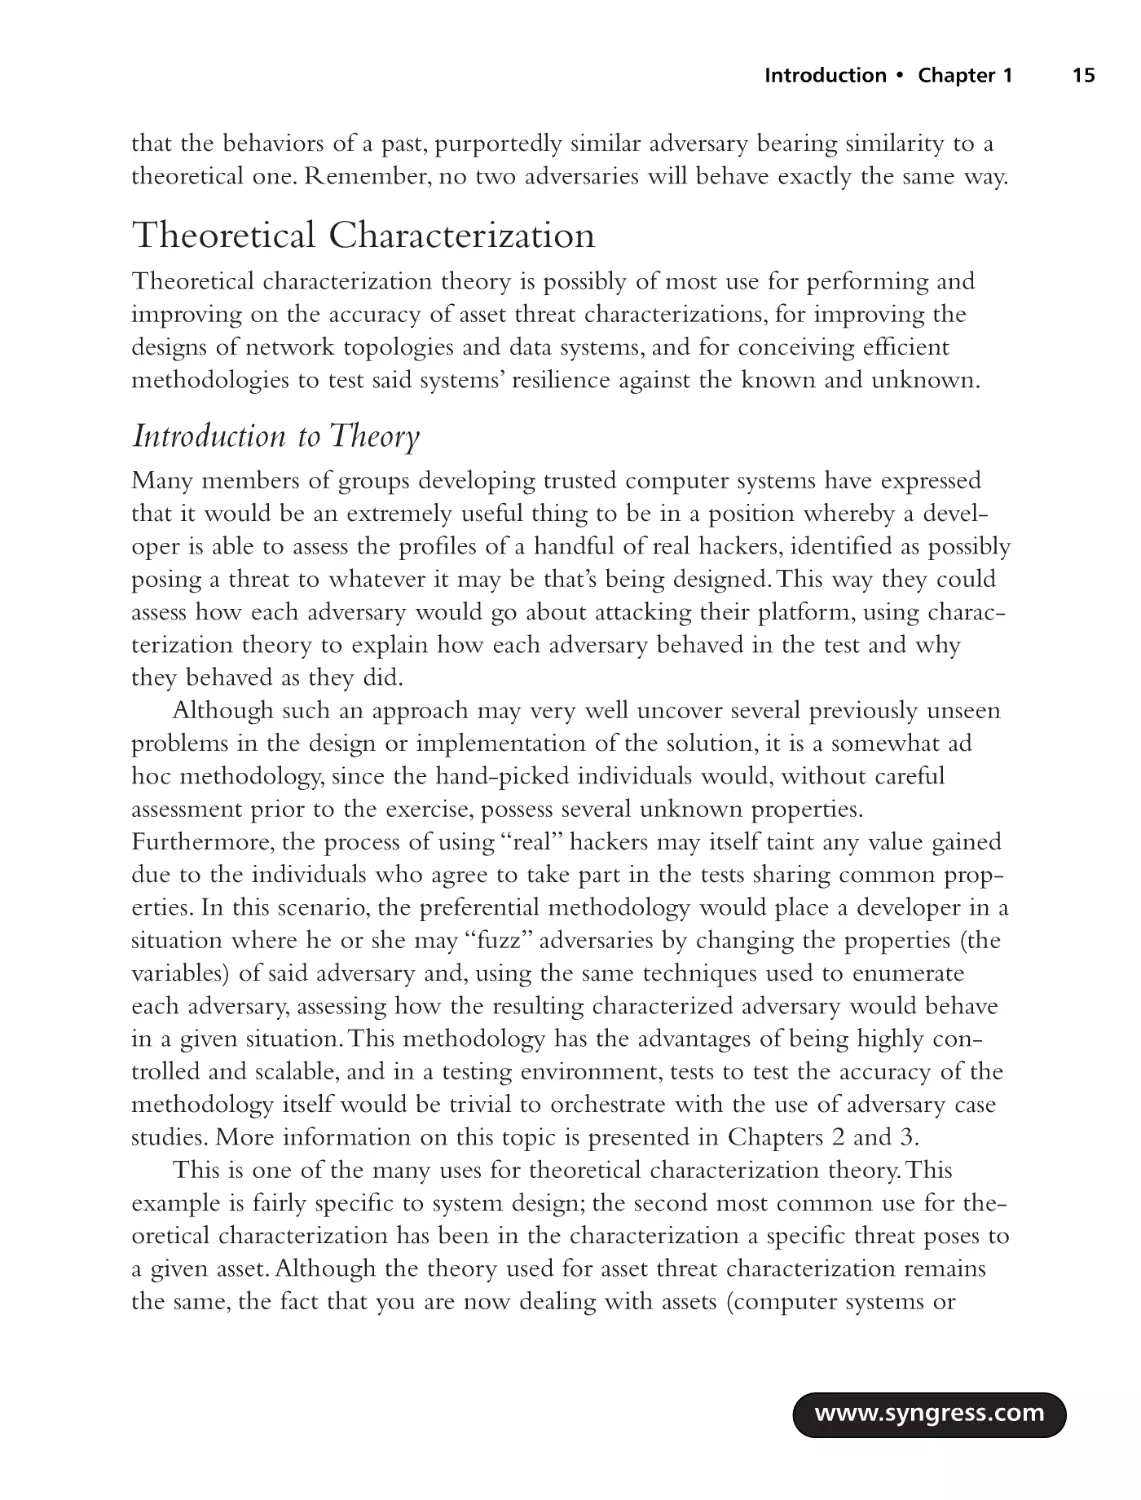 Theoretical Characterization